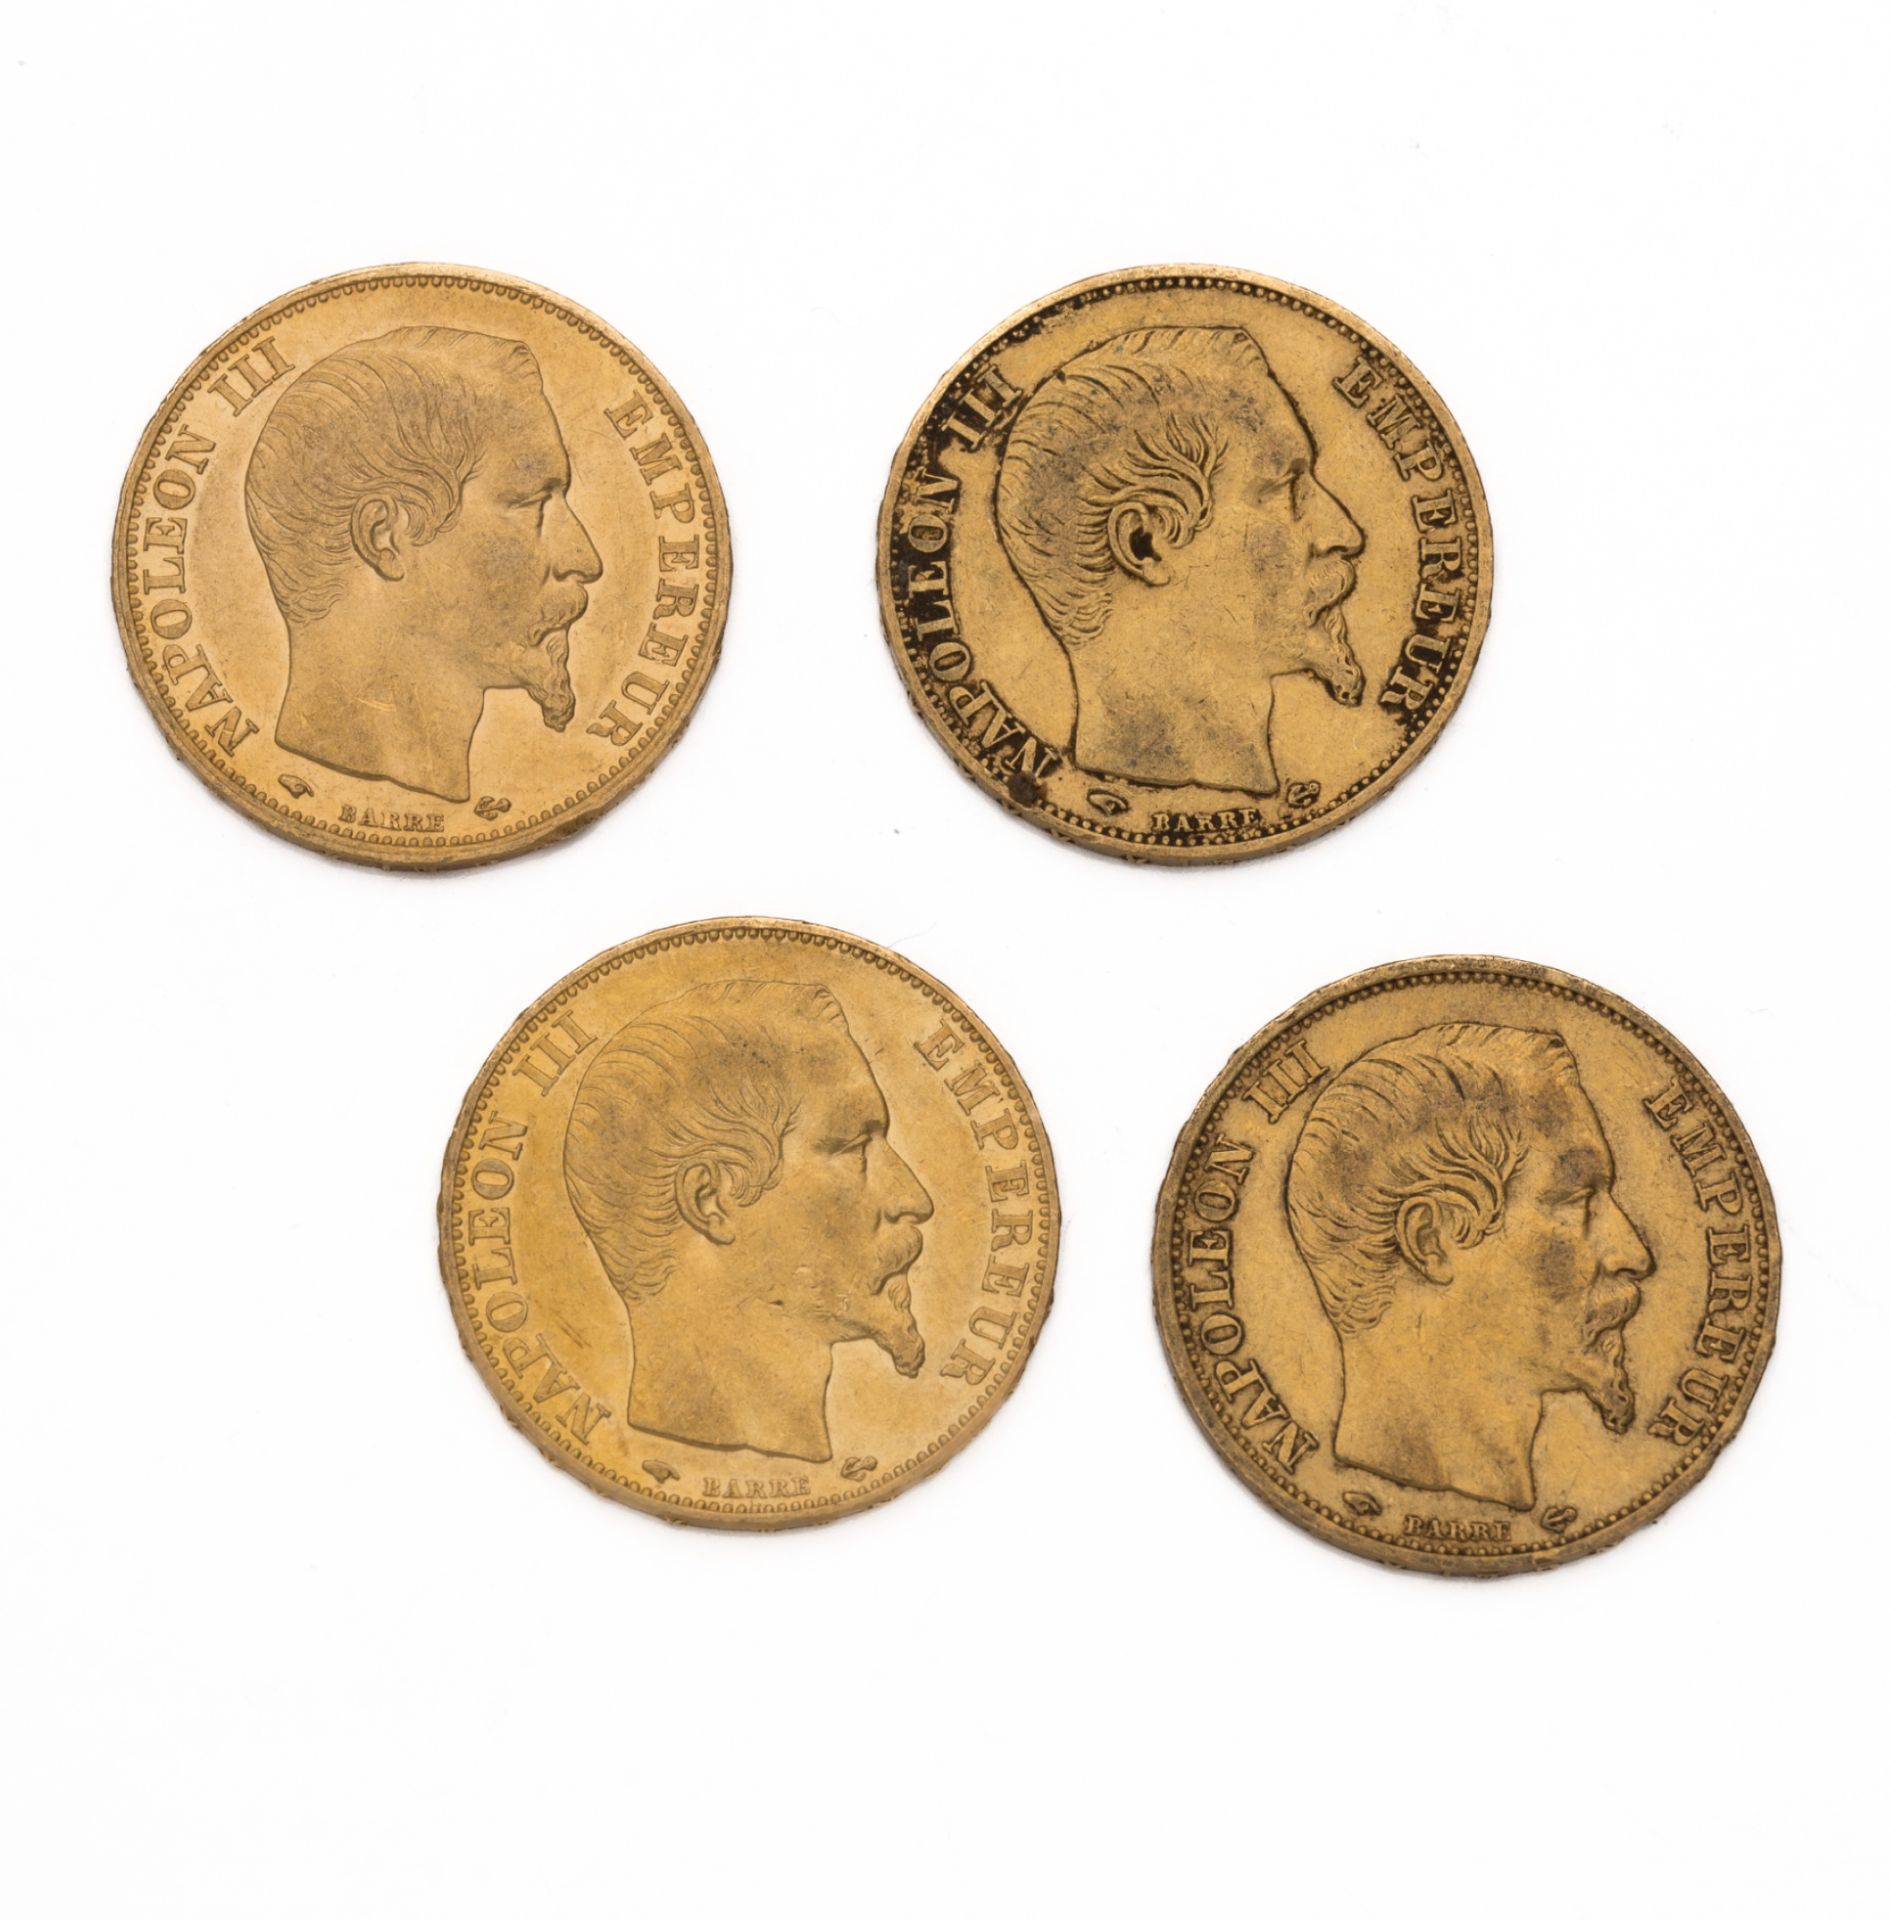 Null SECONDO IMPERO
20 franchi oro Naopelon III, a testa nuda. 4 esemplari. 1859&hellip;